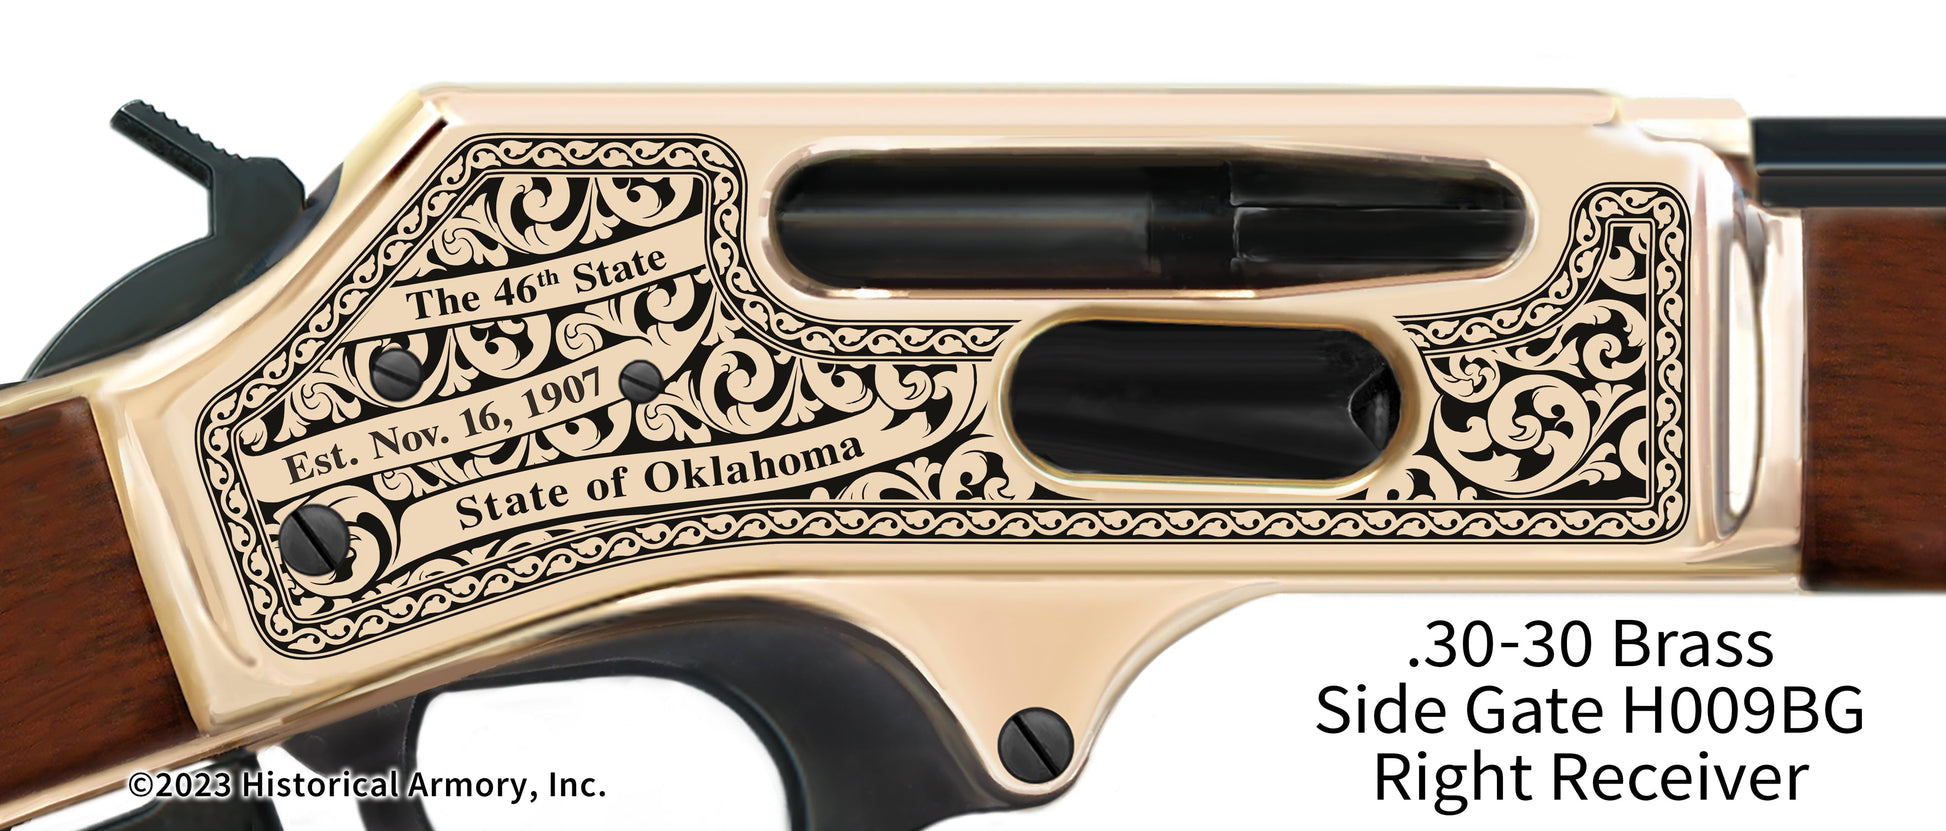 Blaine County Oklahoma Engraved Henry .30-30 Brass Side Gate Rifle